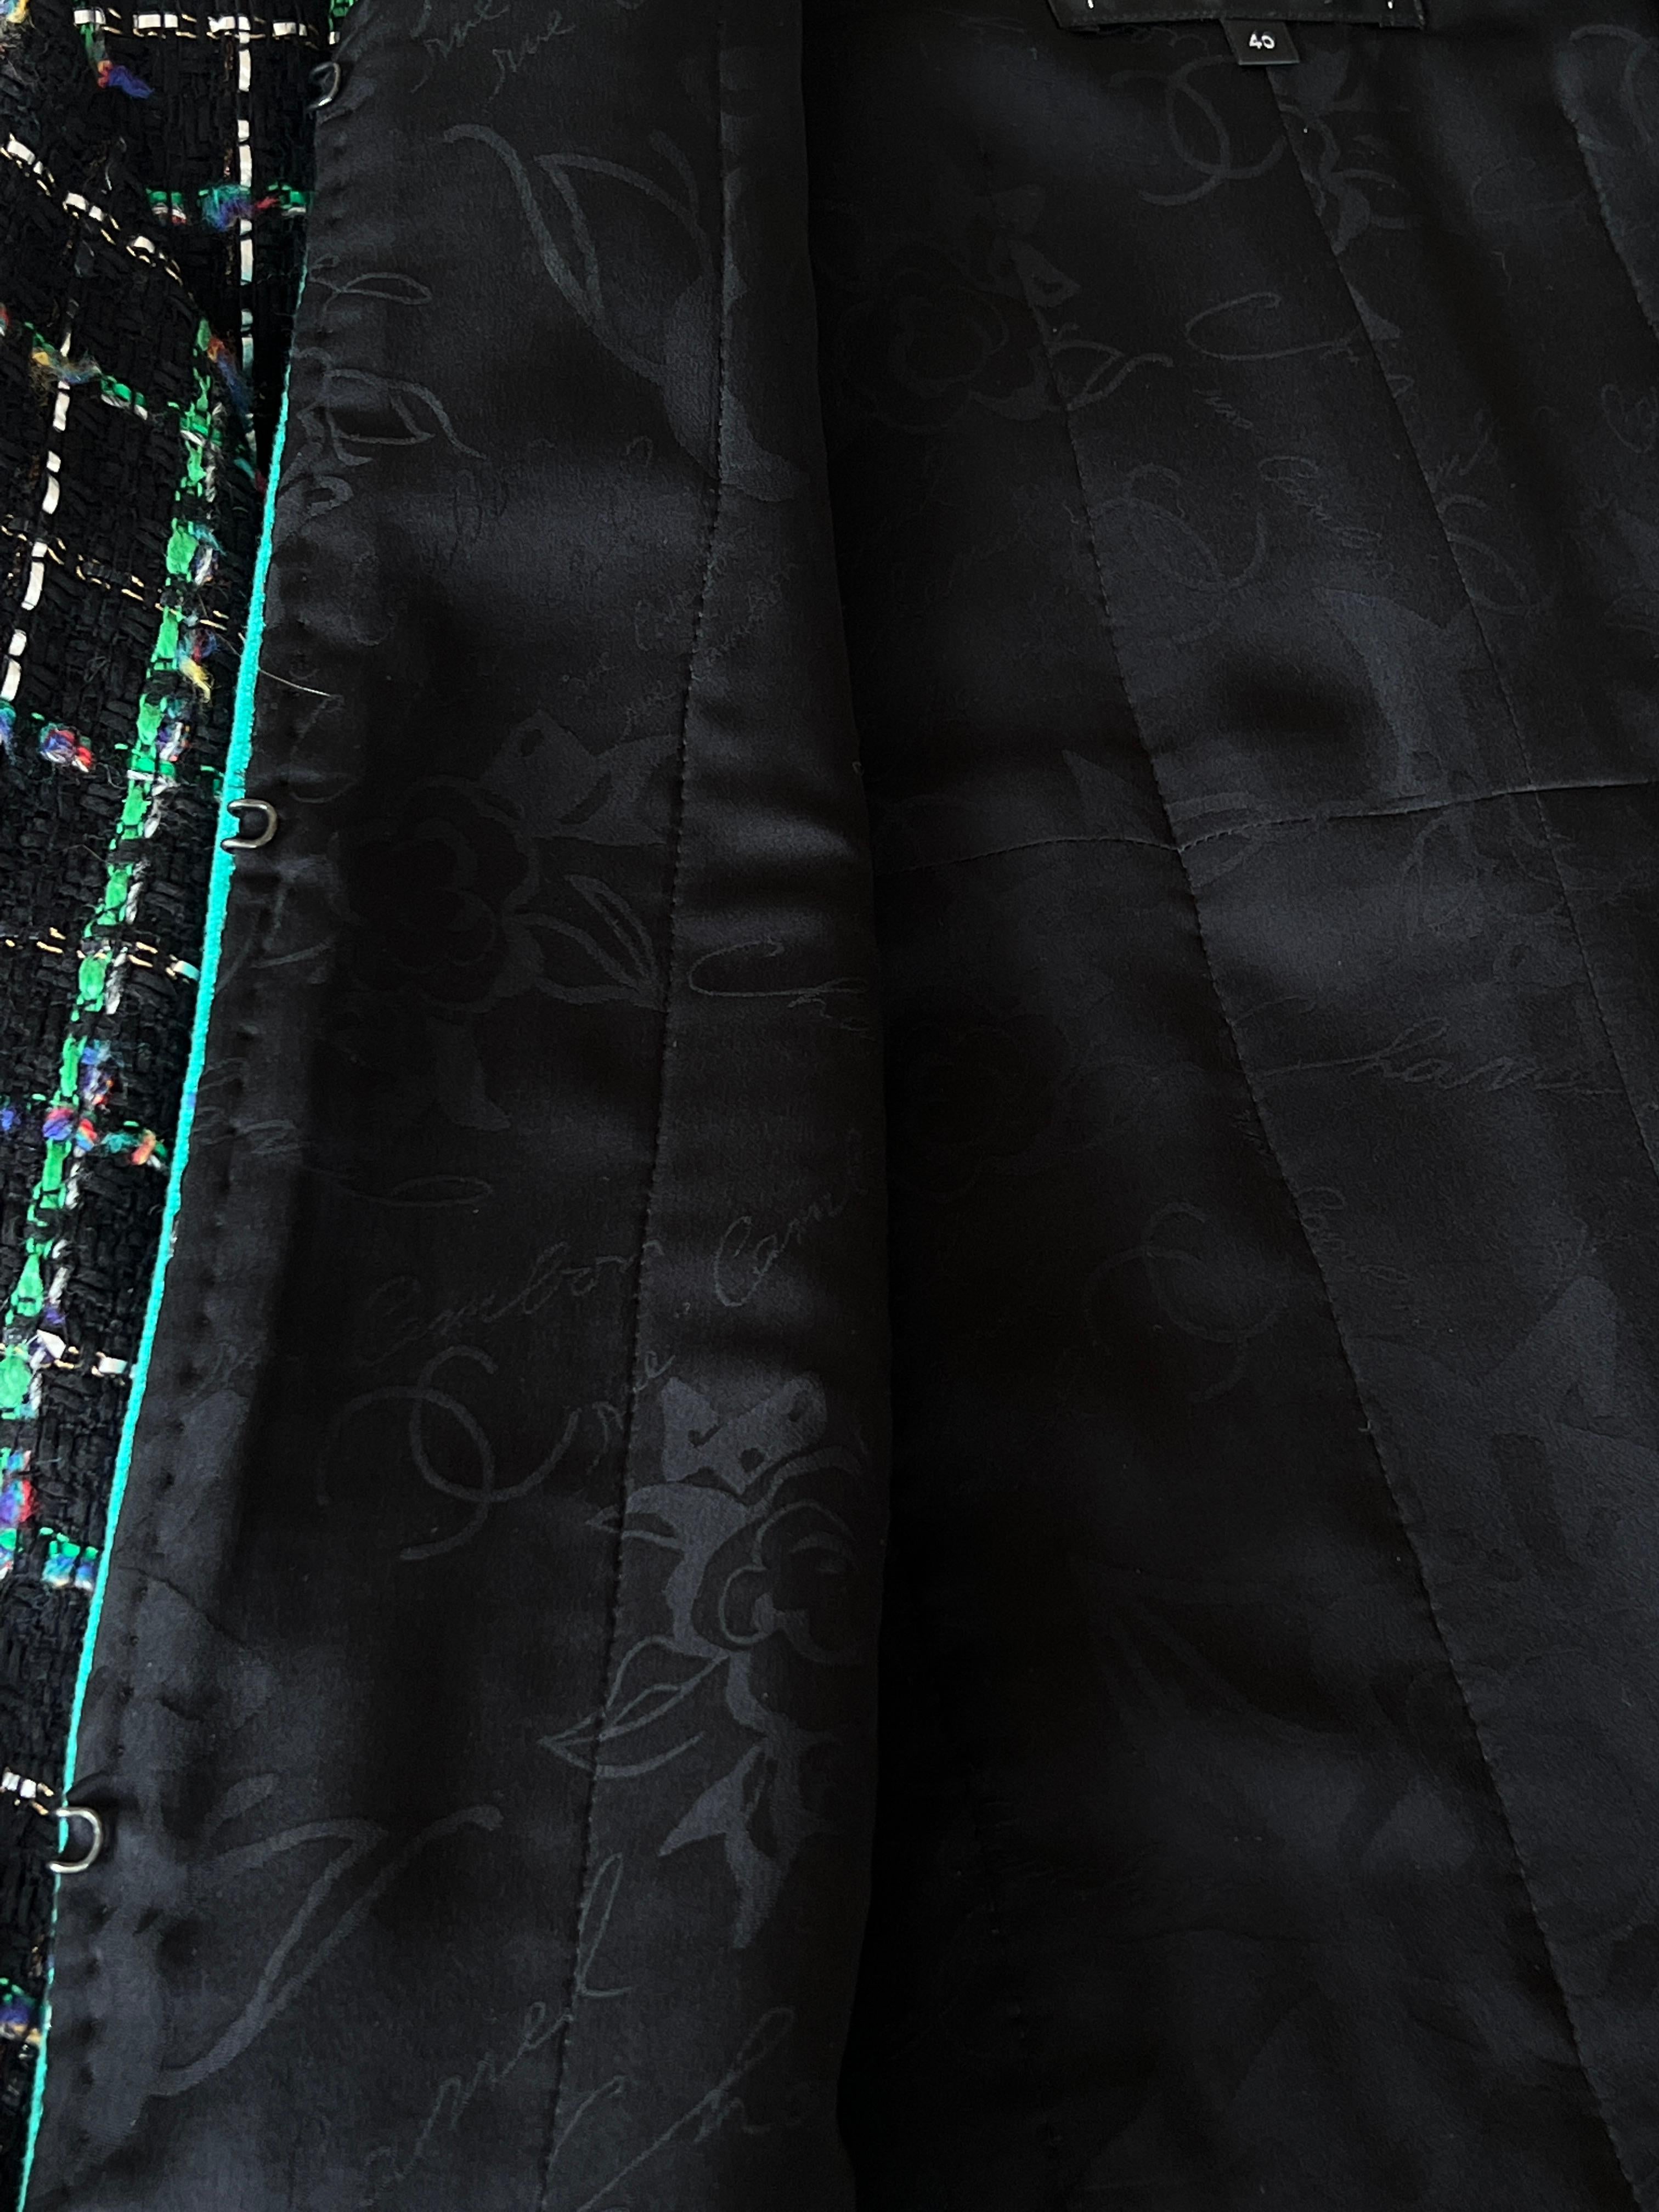 Chanel 9K Lesage Tweed Black and Turquoise Coat 7